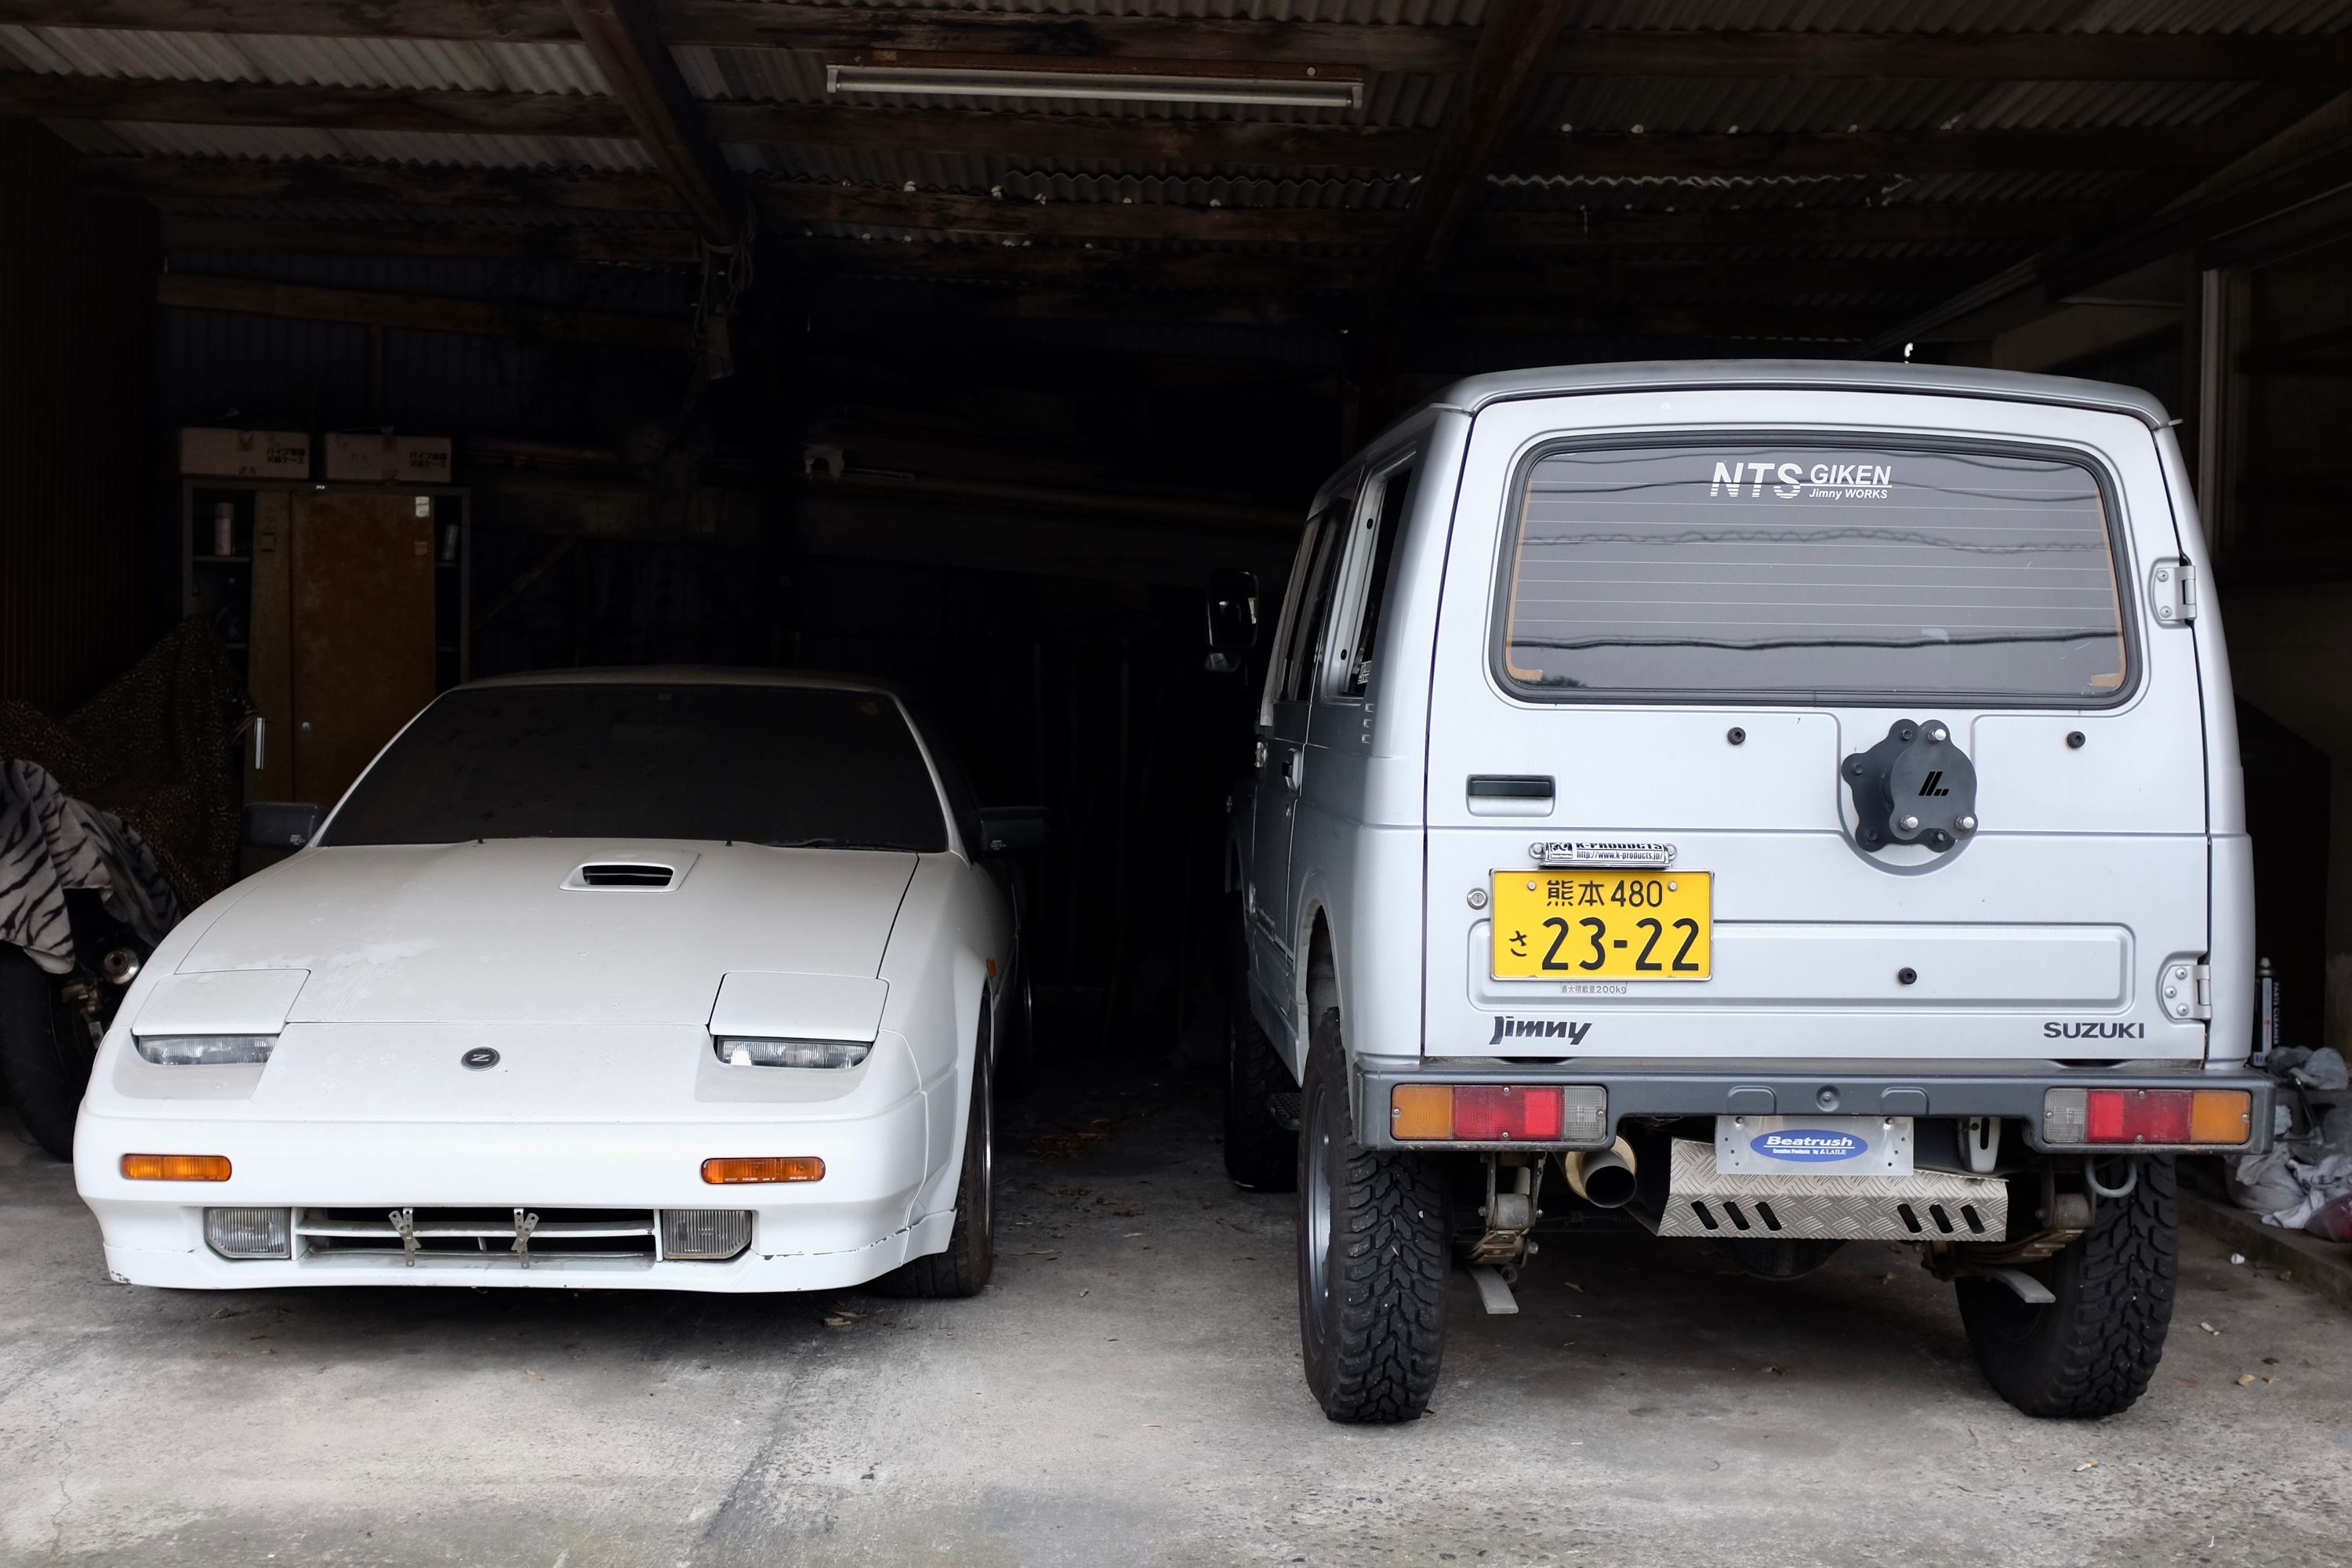 A Nissan Z and a Suzuki Jimny in a garage.